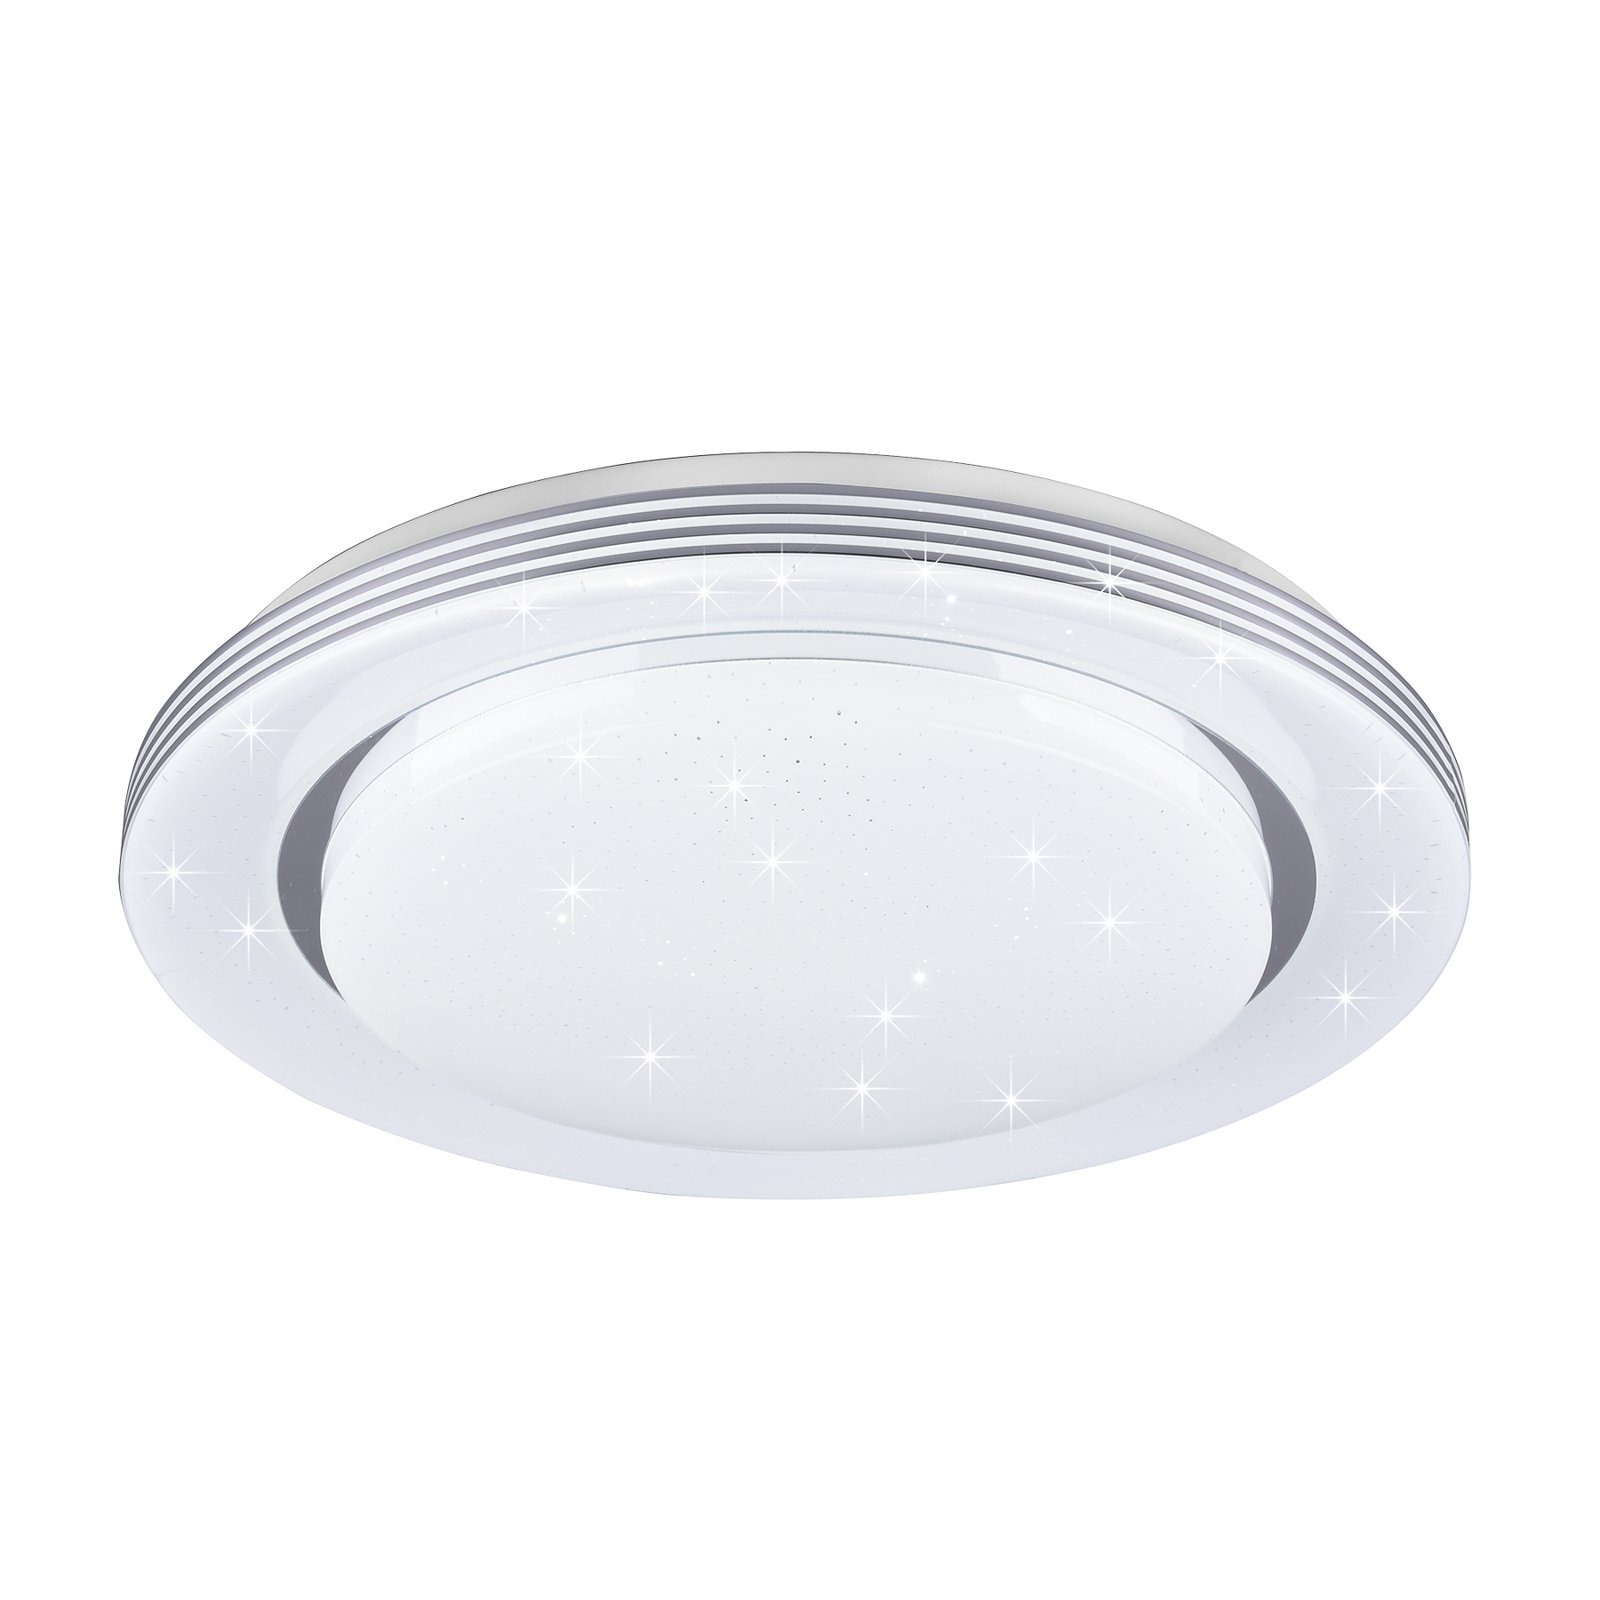 LED-taklampe Atria, Ø 48 cm, hvit, plast, CCT